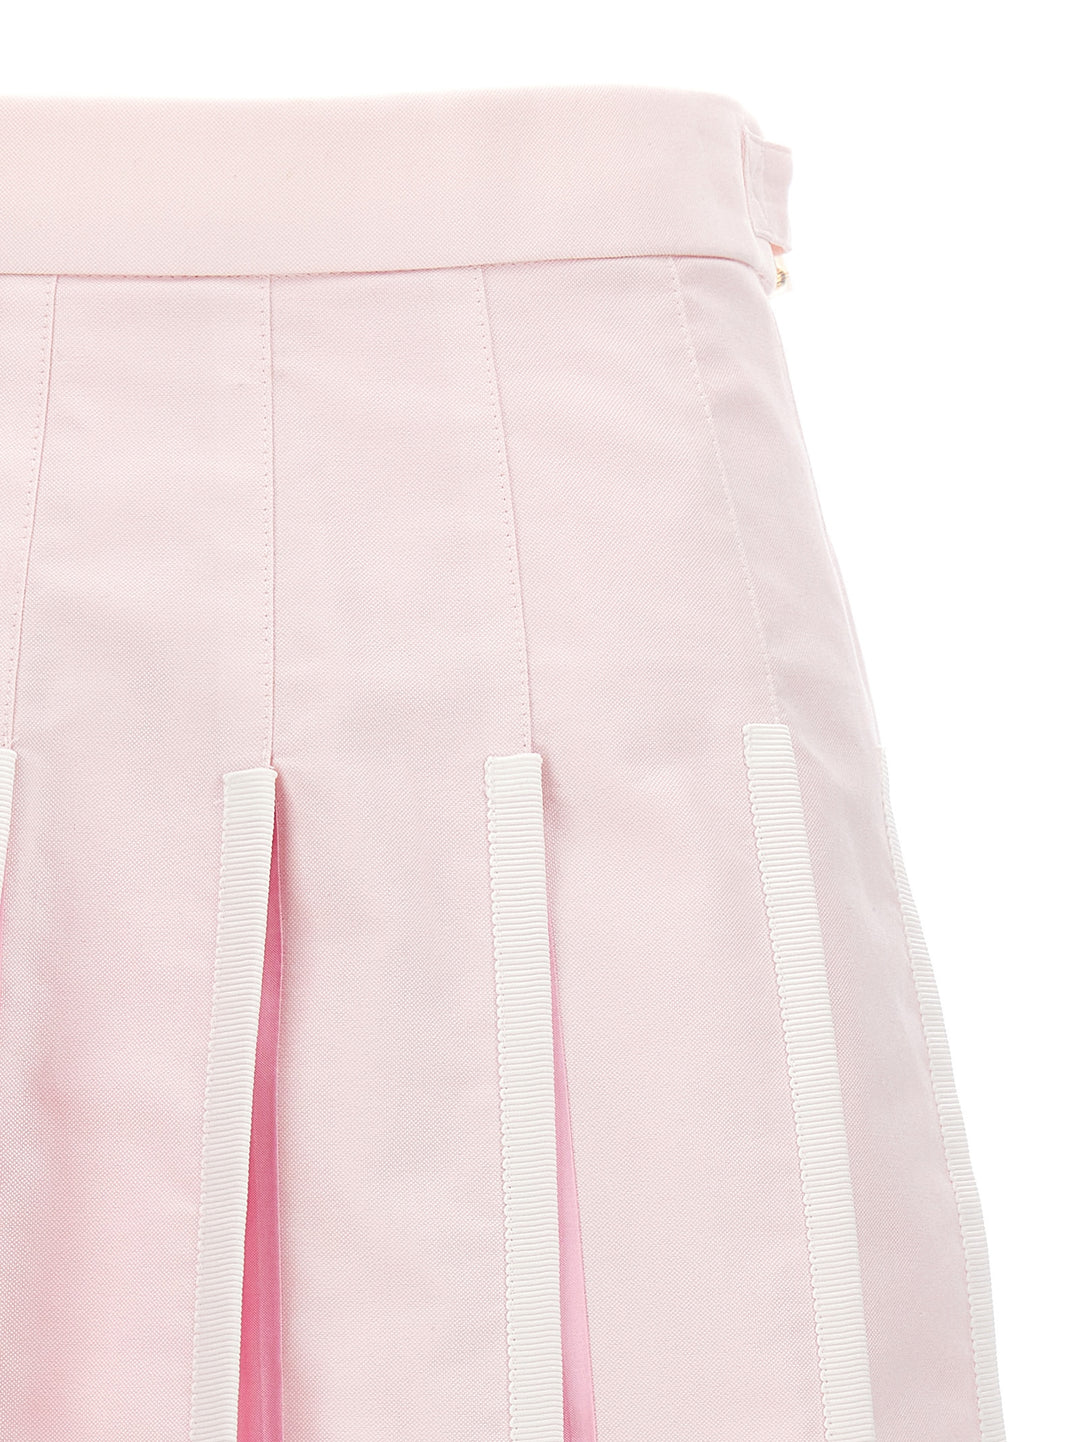 Pleated Oxford Skirt Gonne Rosa